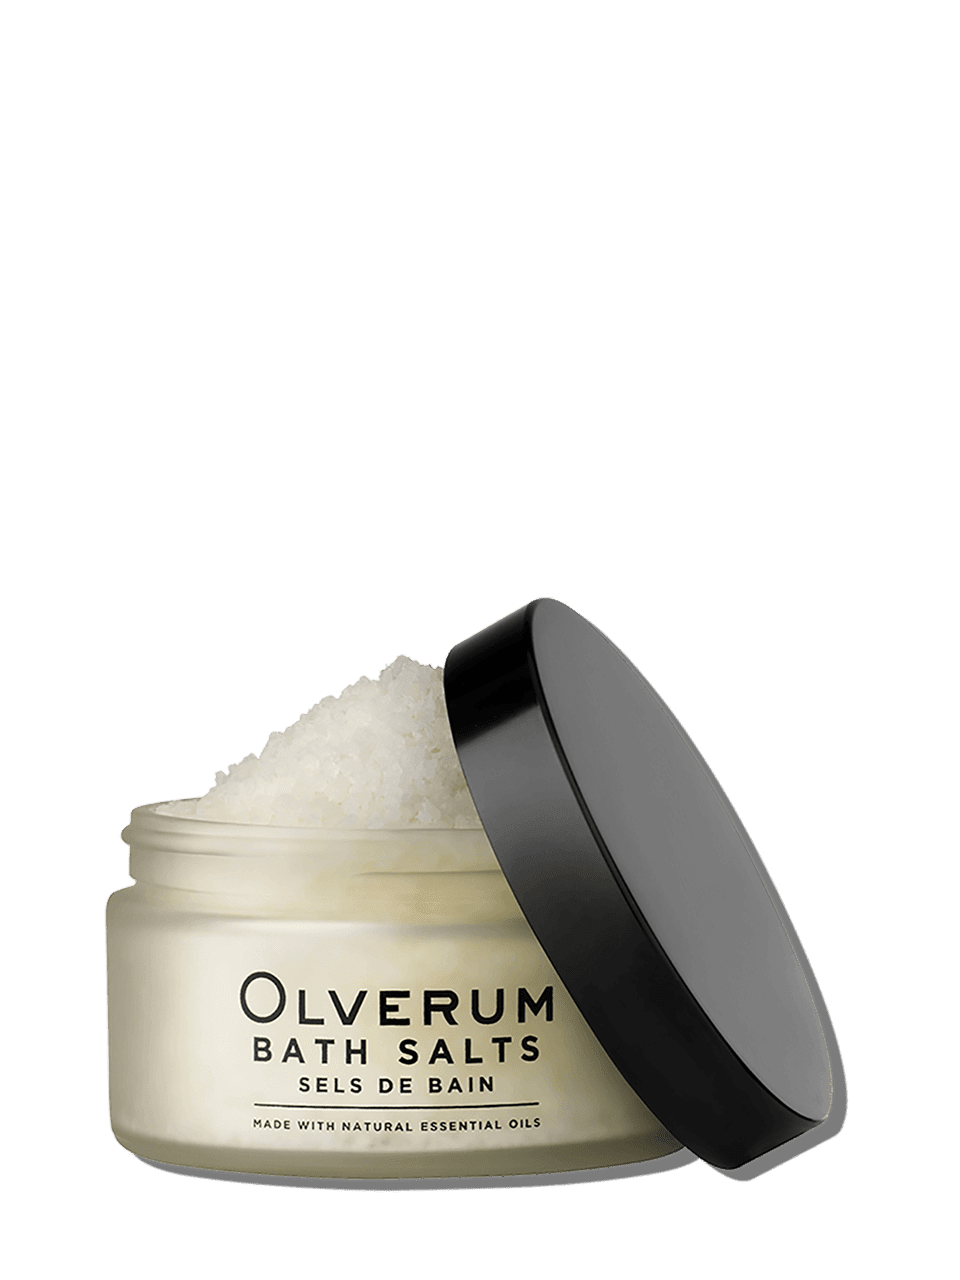 Bath Salts LIFESTYLE Olverum 